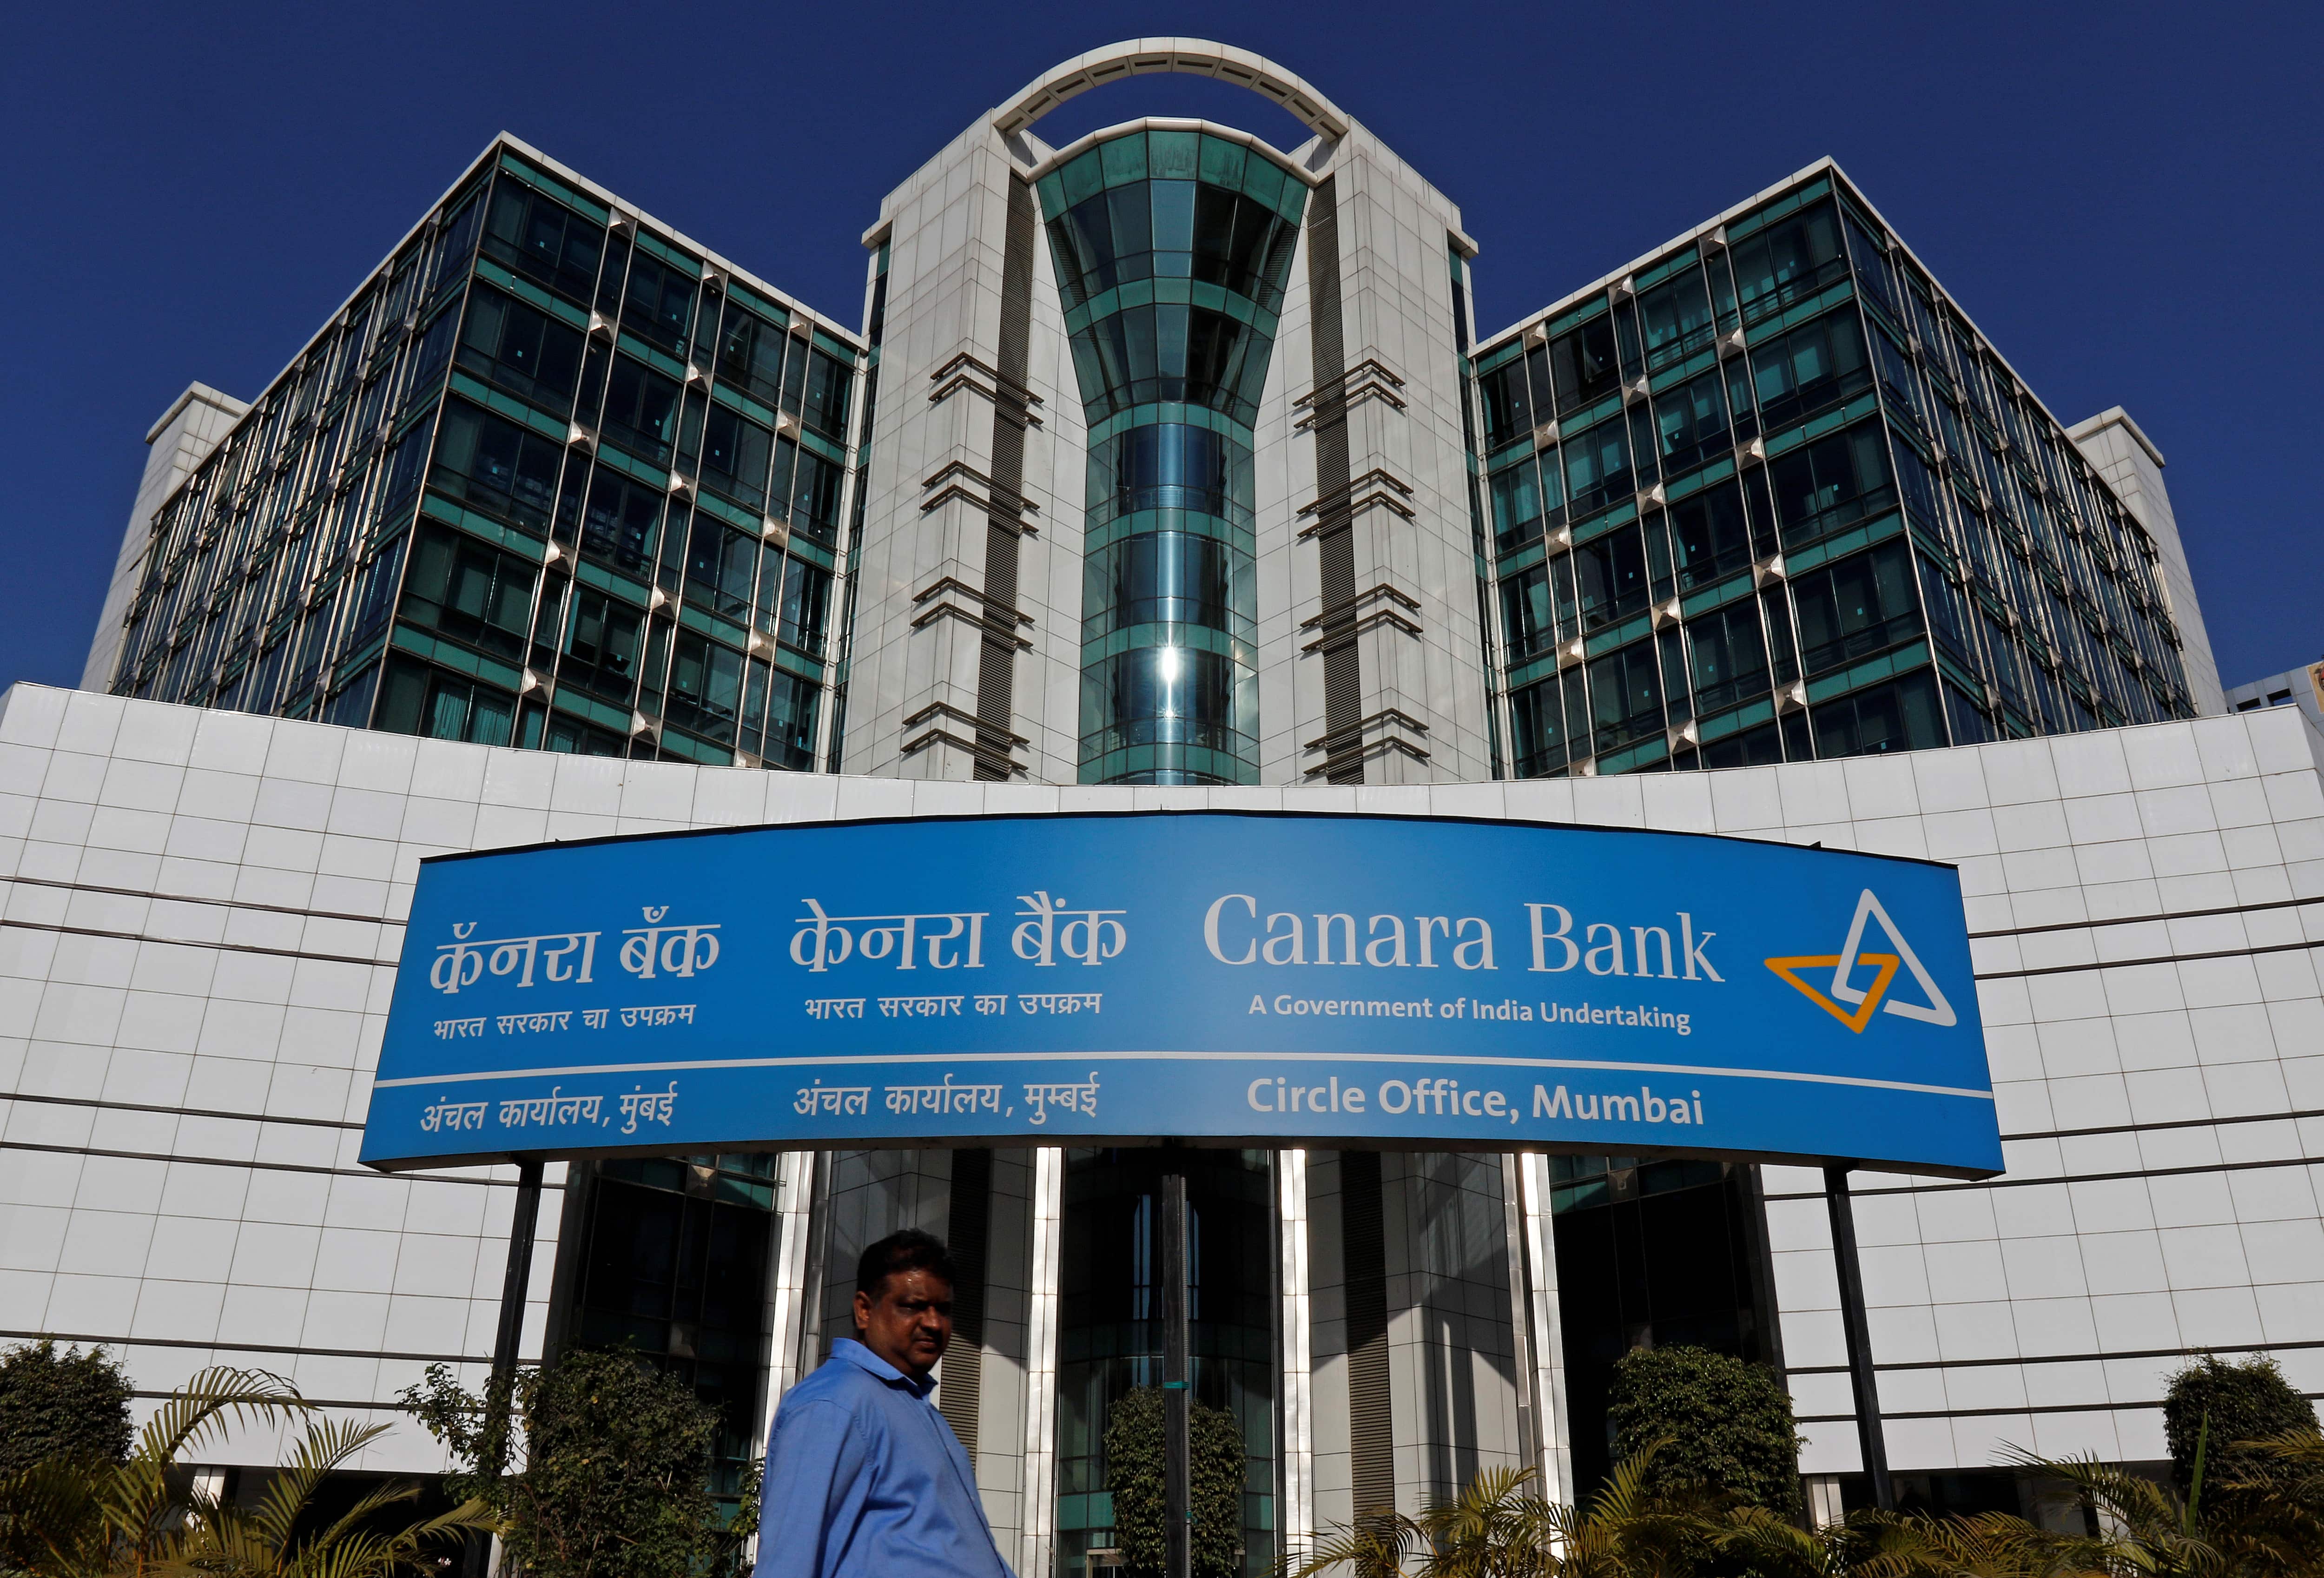 Canara Bank posts 18.4% jump in Q4 net profit, declares dividend of 16 per share